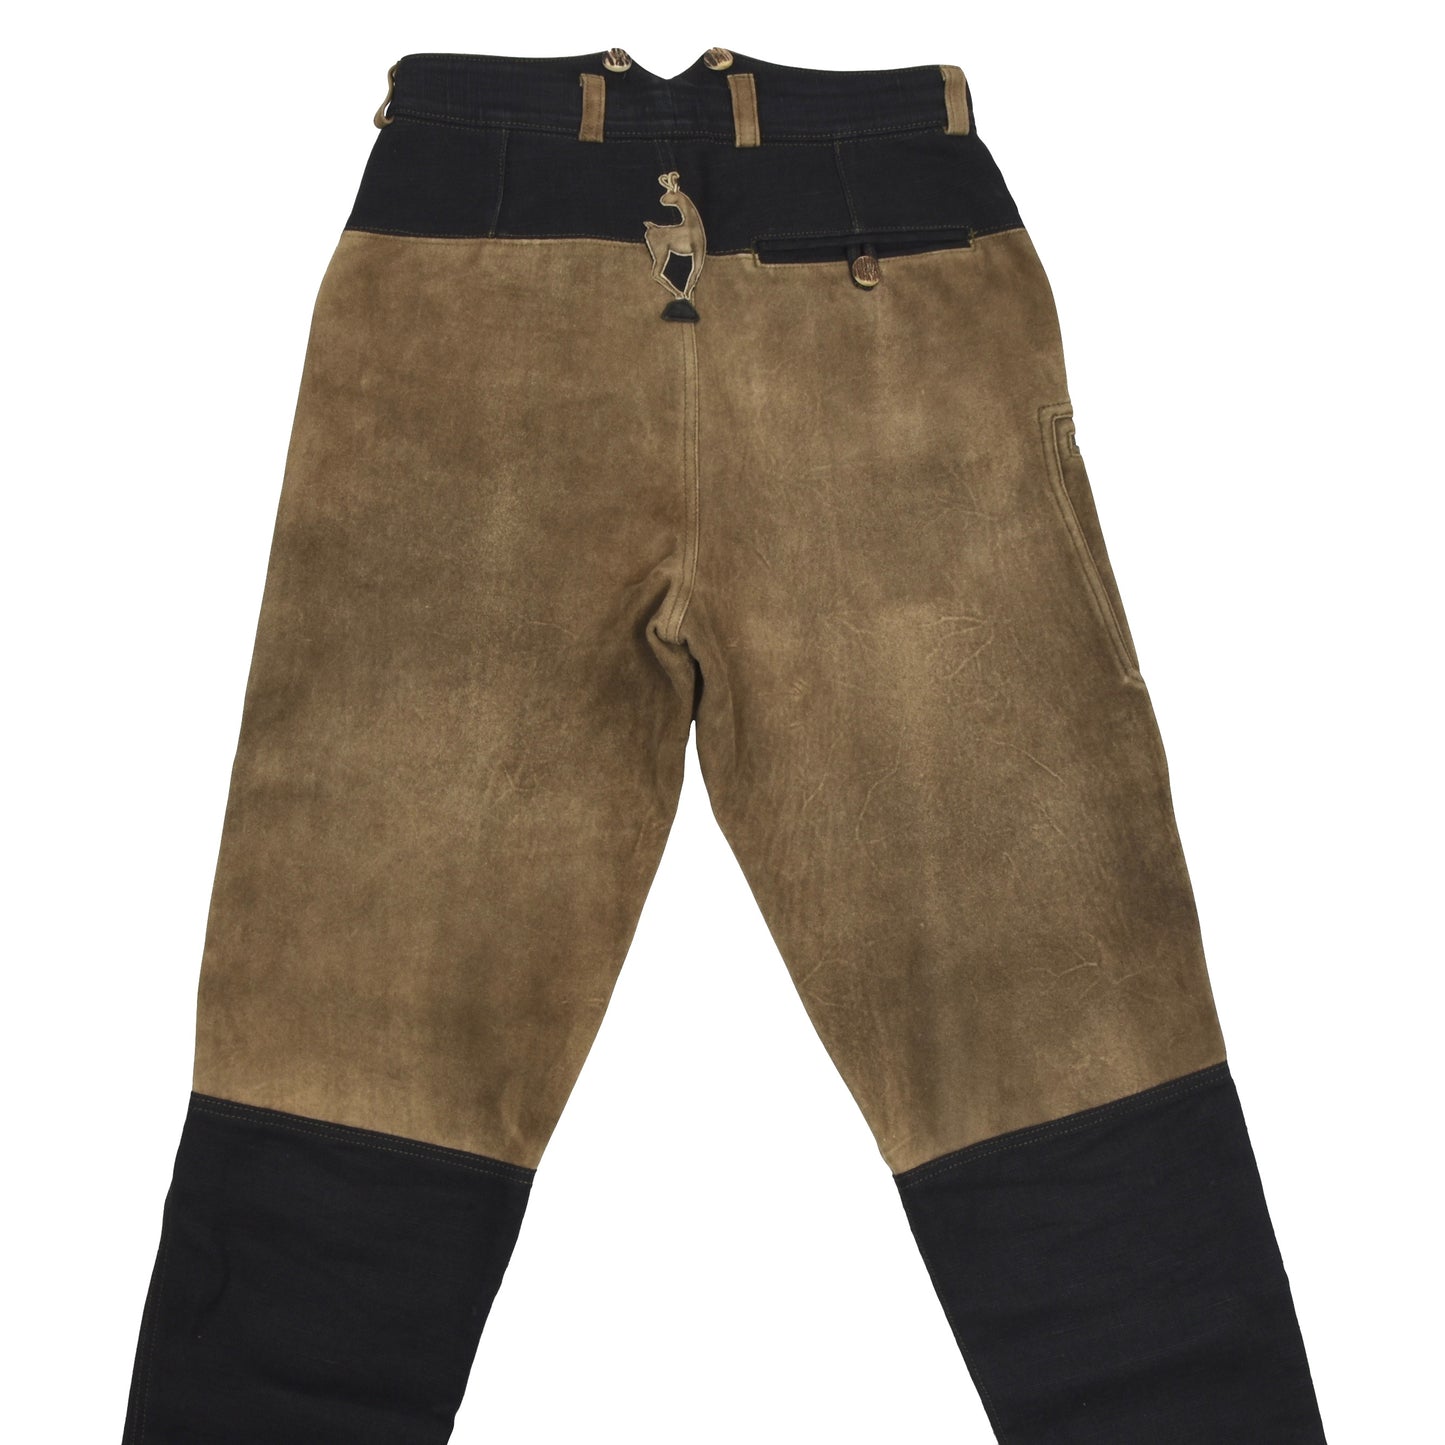 Meindl Leather & Linen Pants Size 48